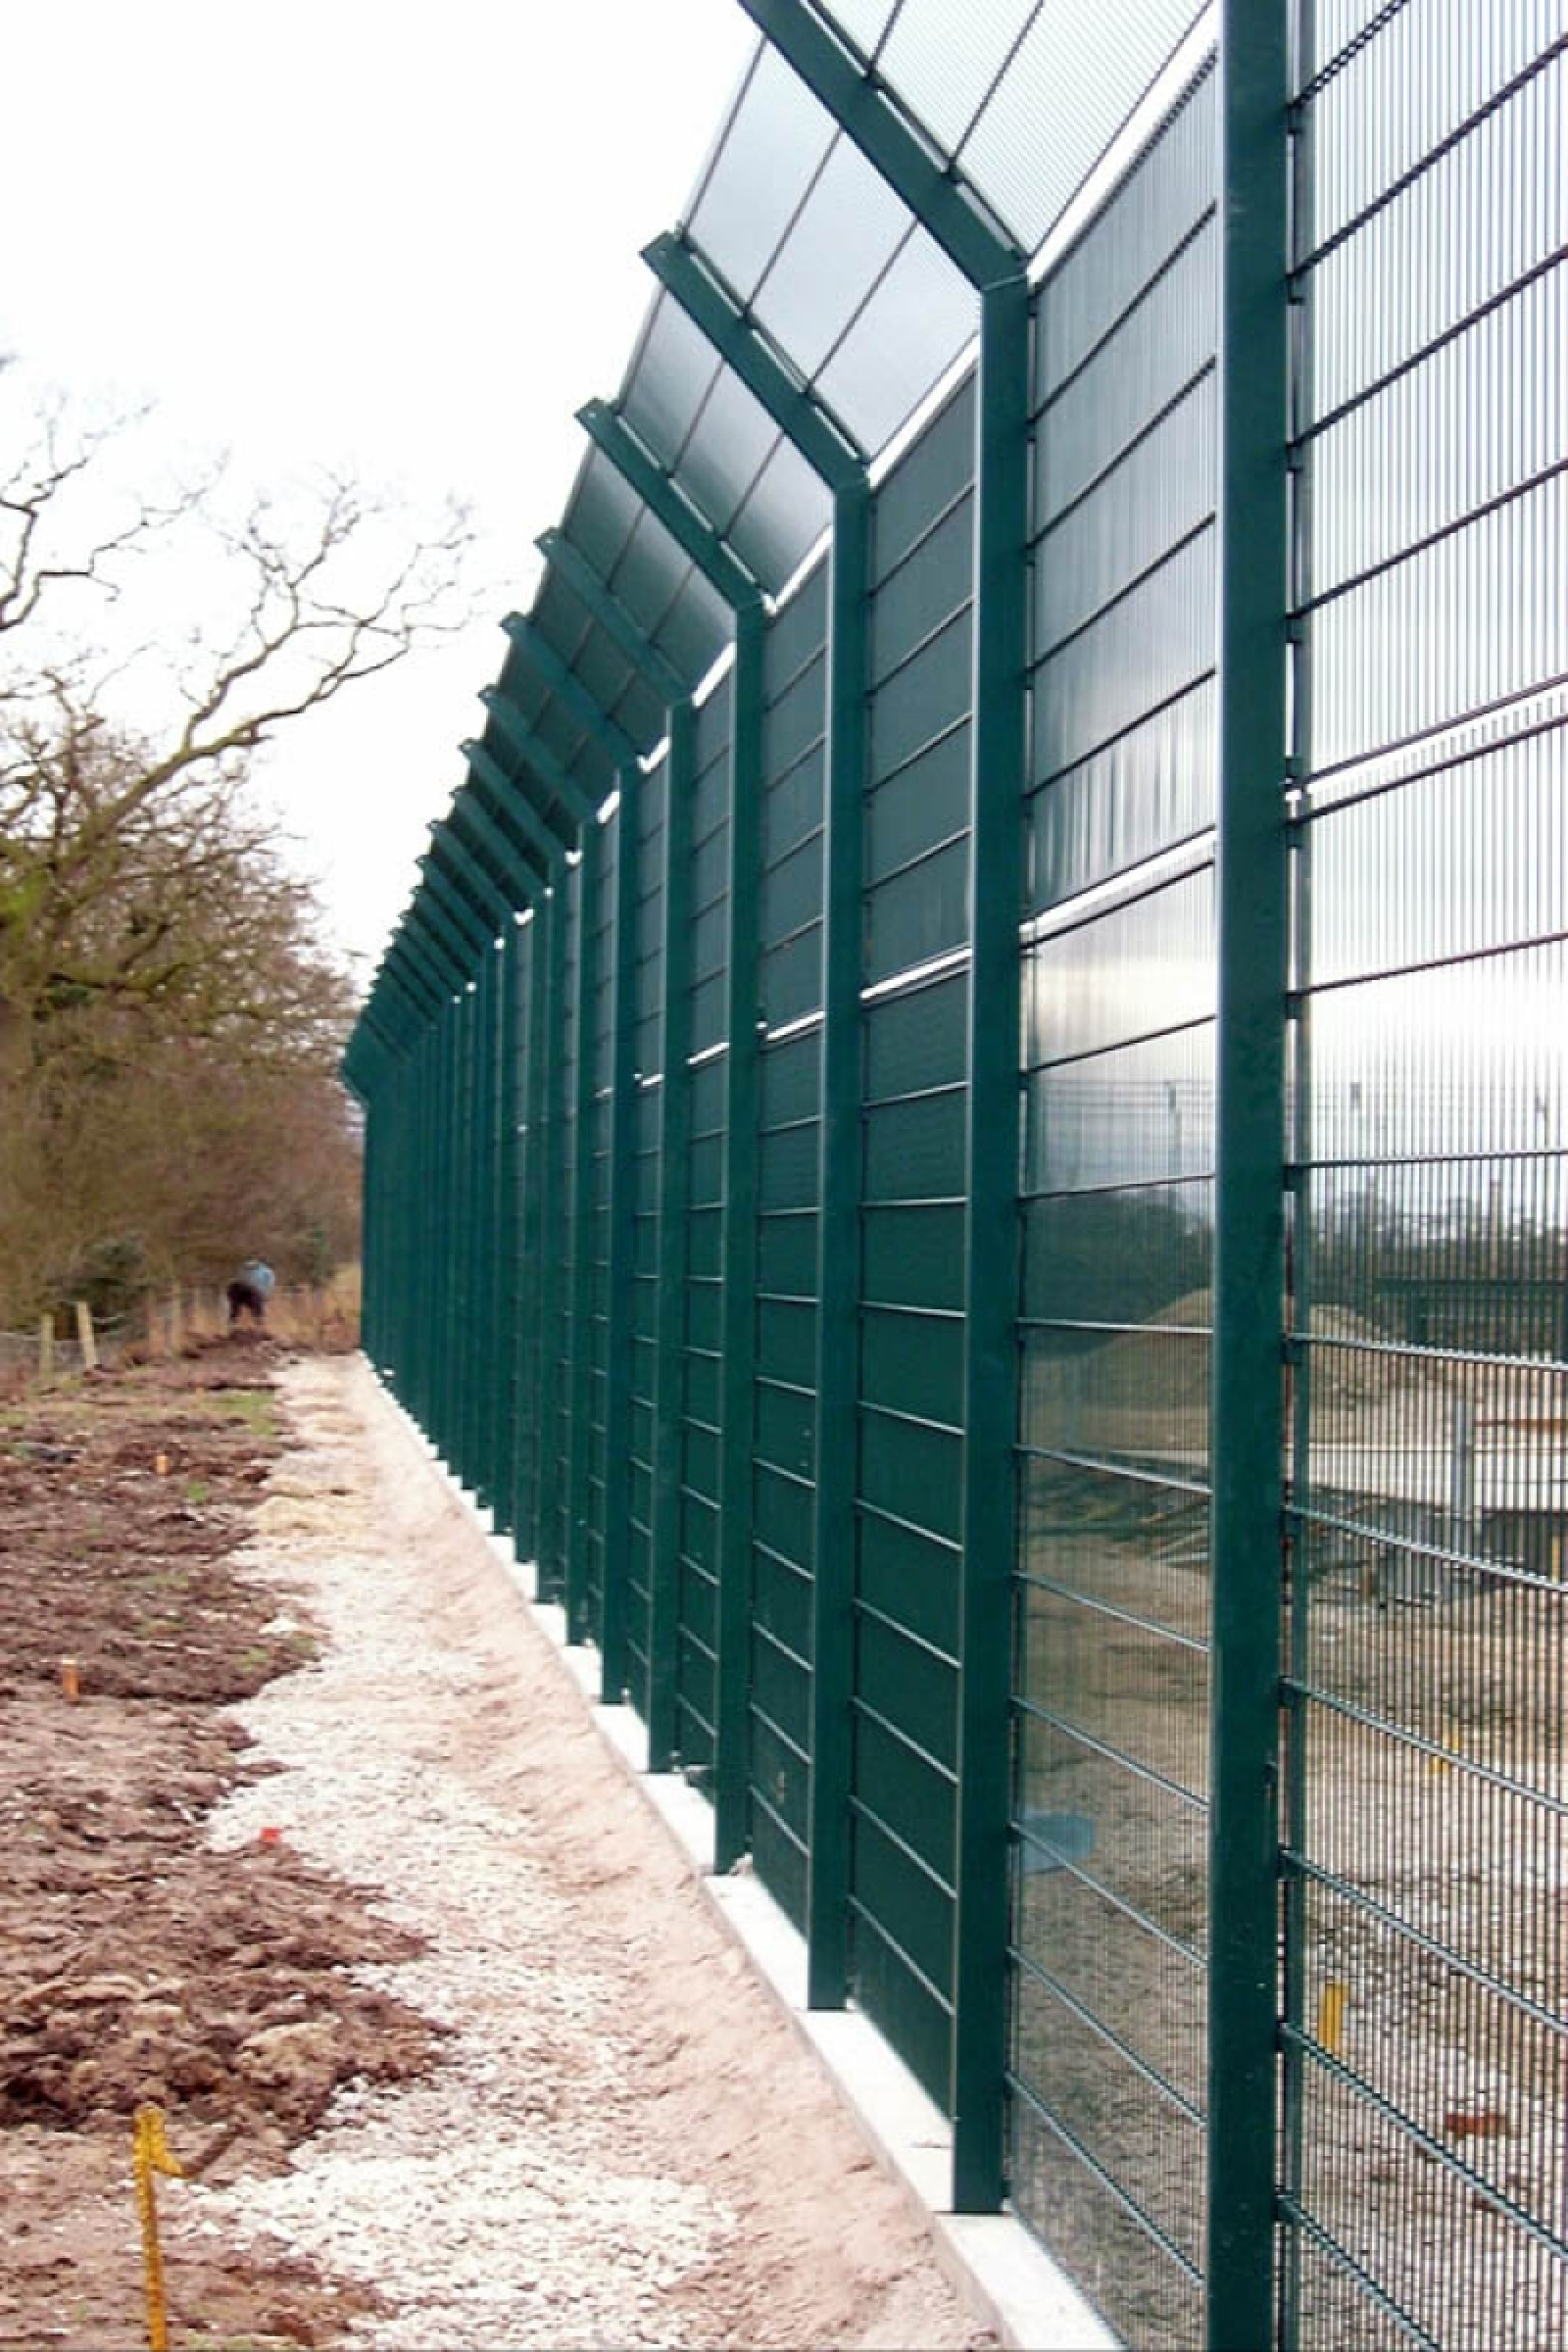 Demountable fencing secures EDF underground gas ch...